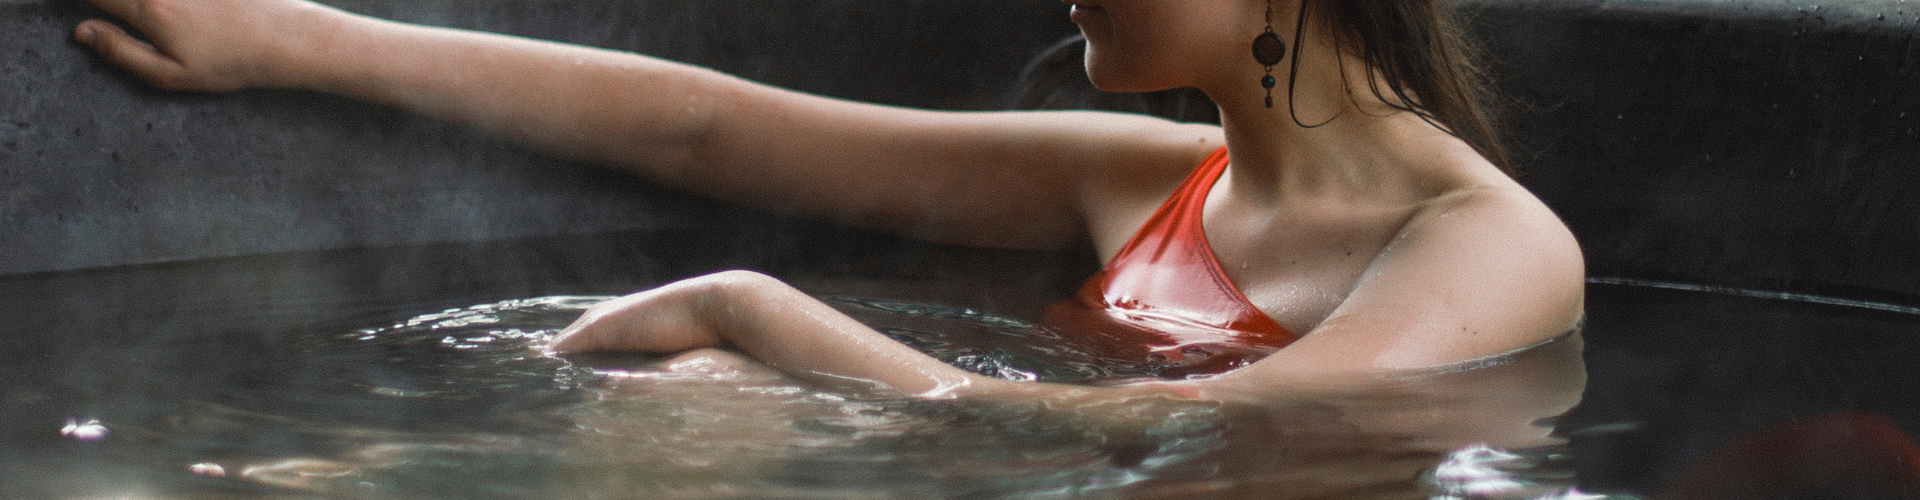 woman sitting in a hot tub